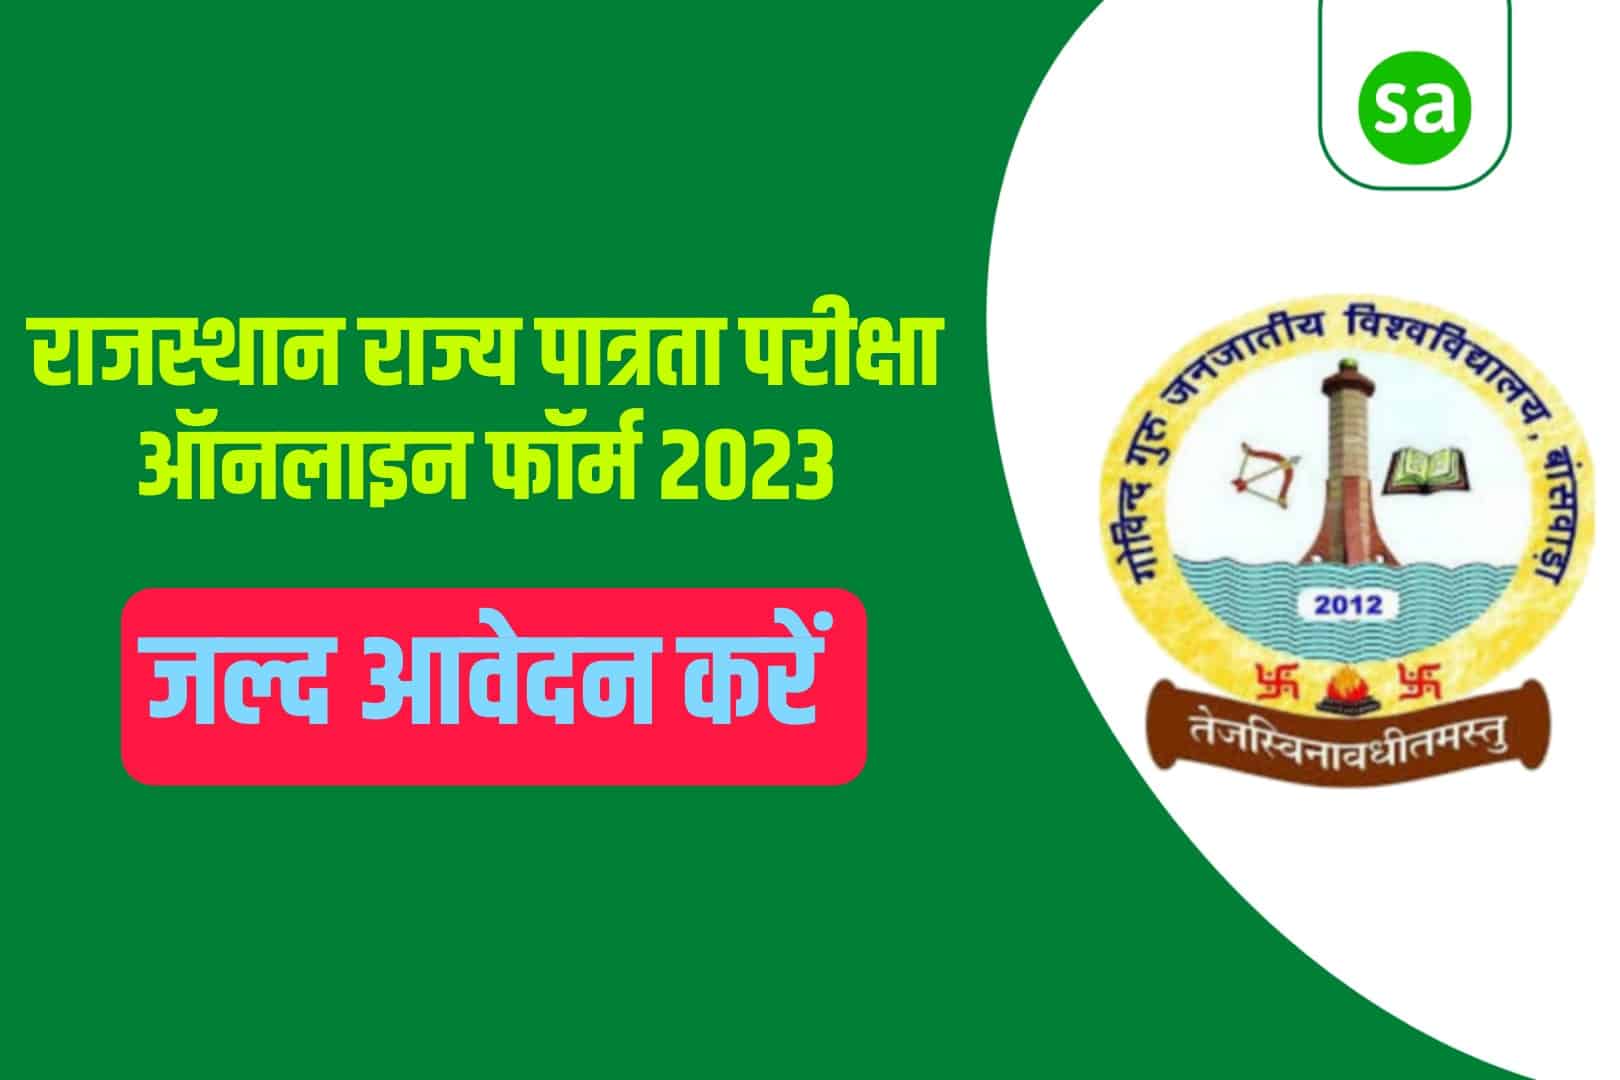 Rajasthan State Eligibility Test SET Online Form 2023 | राजस्थान राज्य पात्रता परीक्षा ऑनलाइन फॉर्म 2023